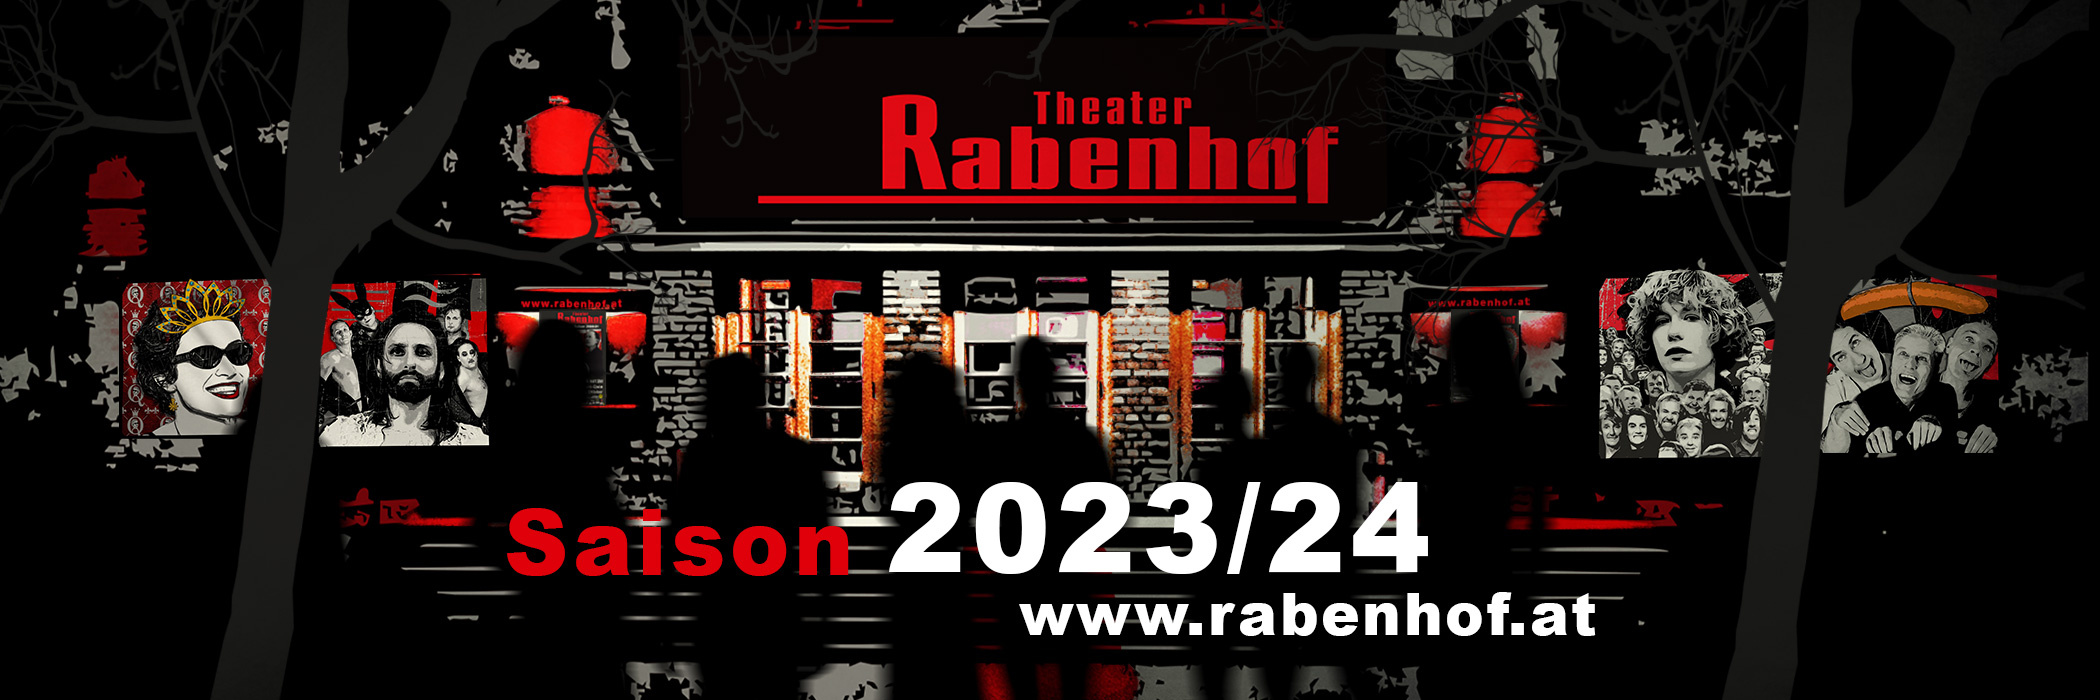 (c) Rabenhoftheater.com